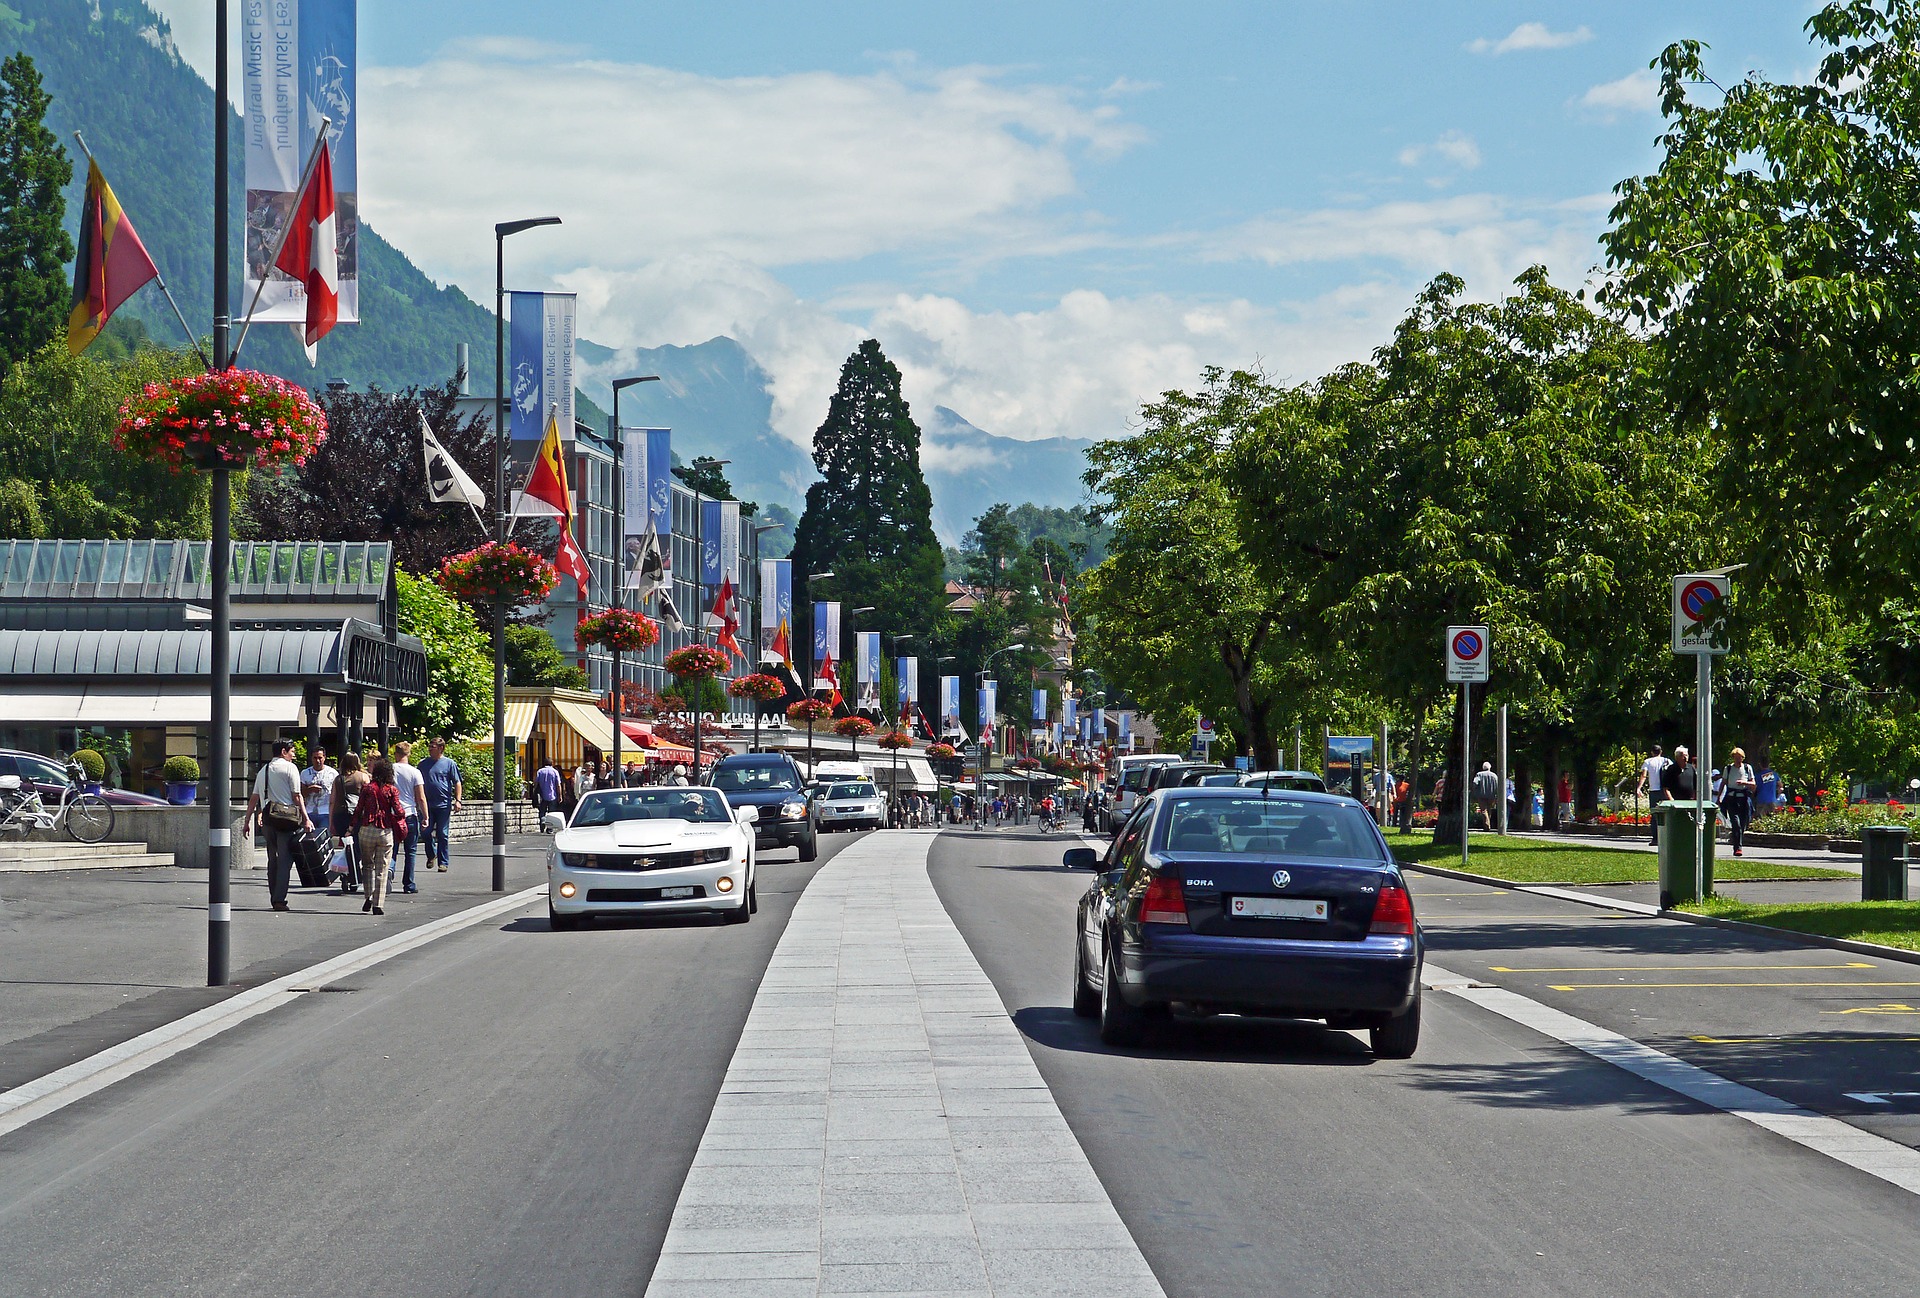 A main road in Switzerland